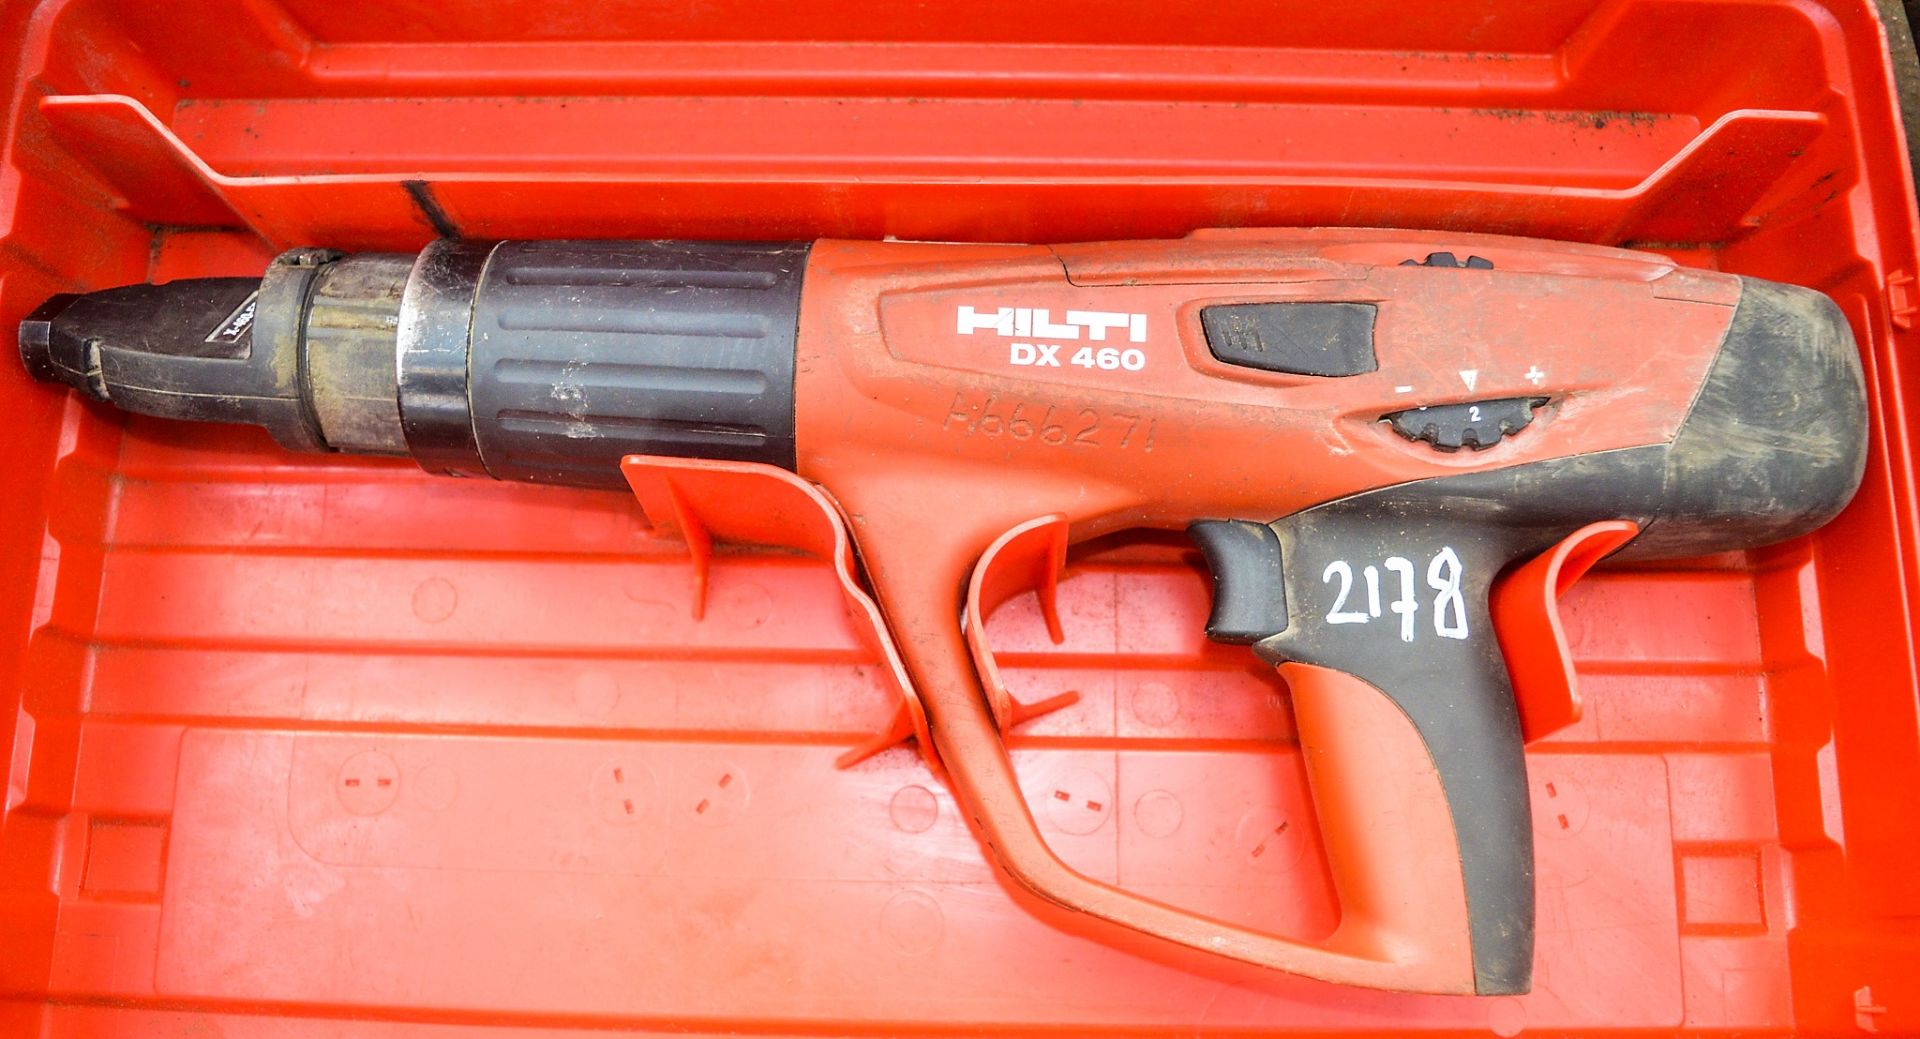 Hilti DX460 nail gun c/w carry case A666271